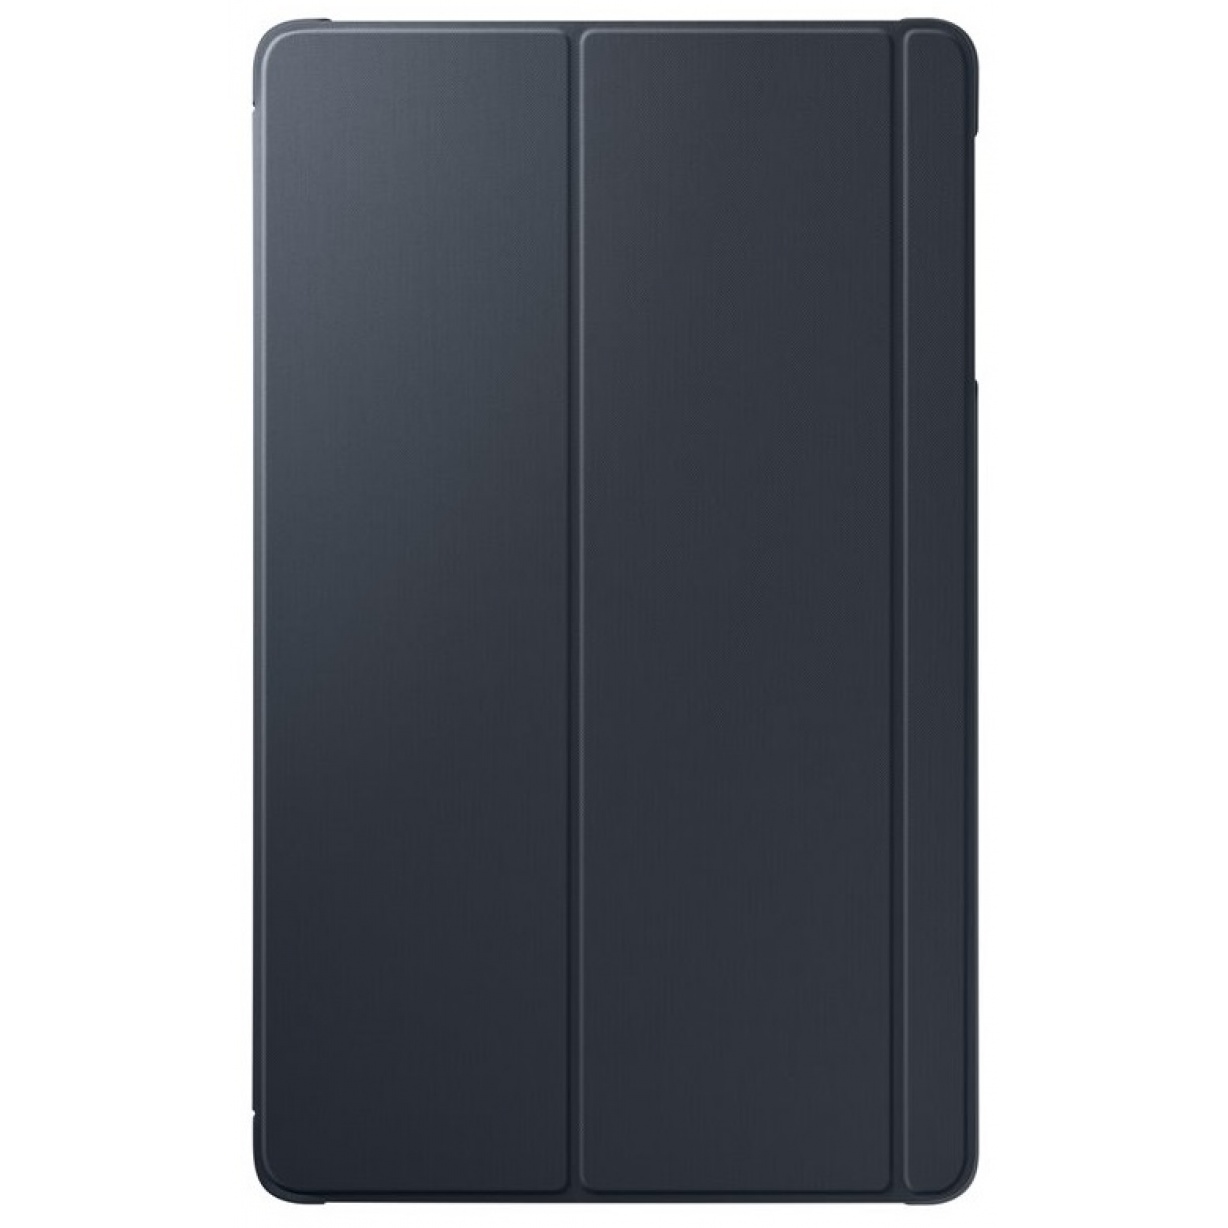 Dėklas T510 Samsung Galaxy Tab A 10.1" (2019) Book cover Juodas